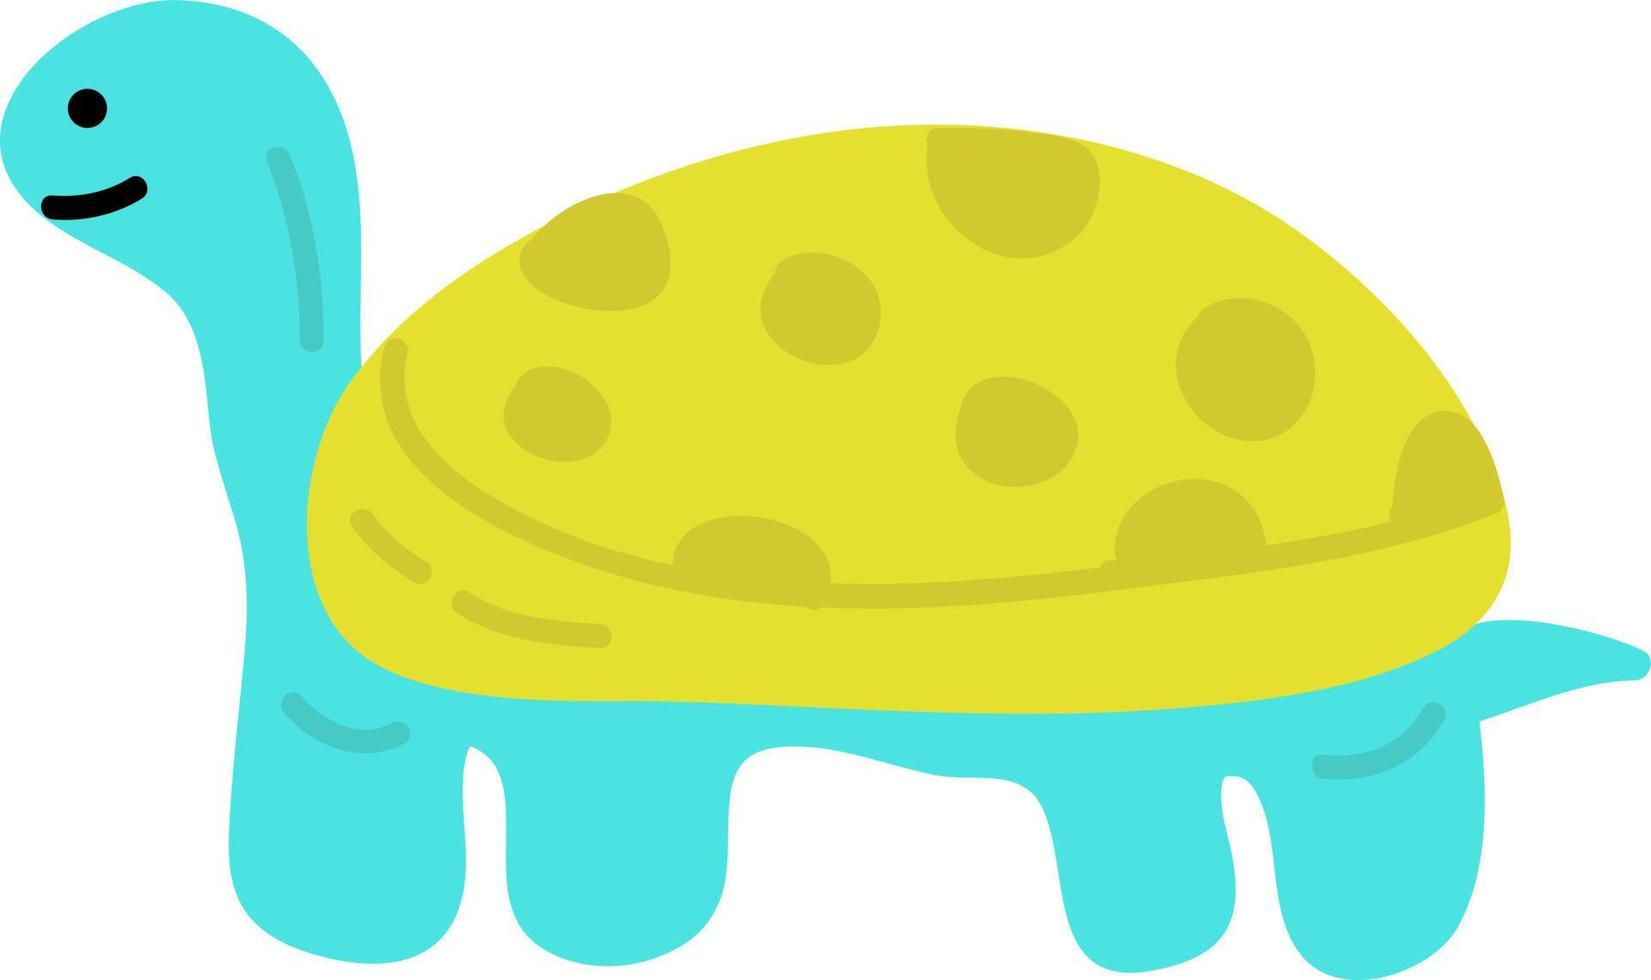 mano disegnato stile oceano tartaruga vettore